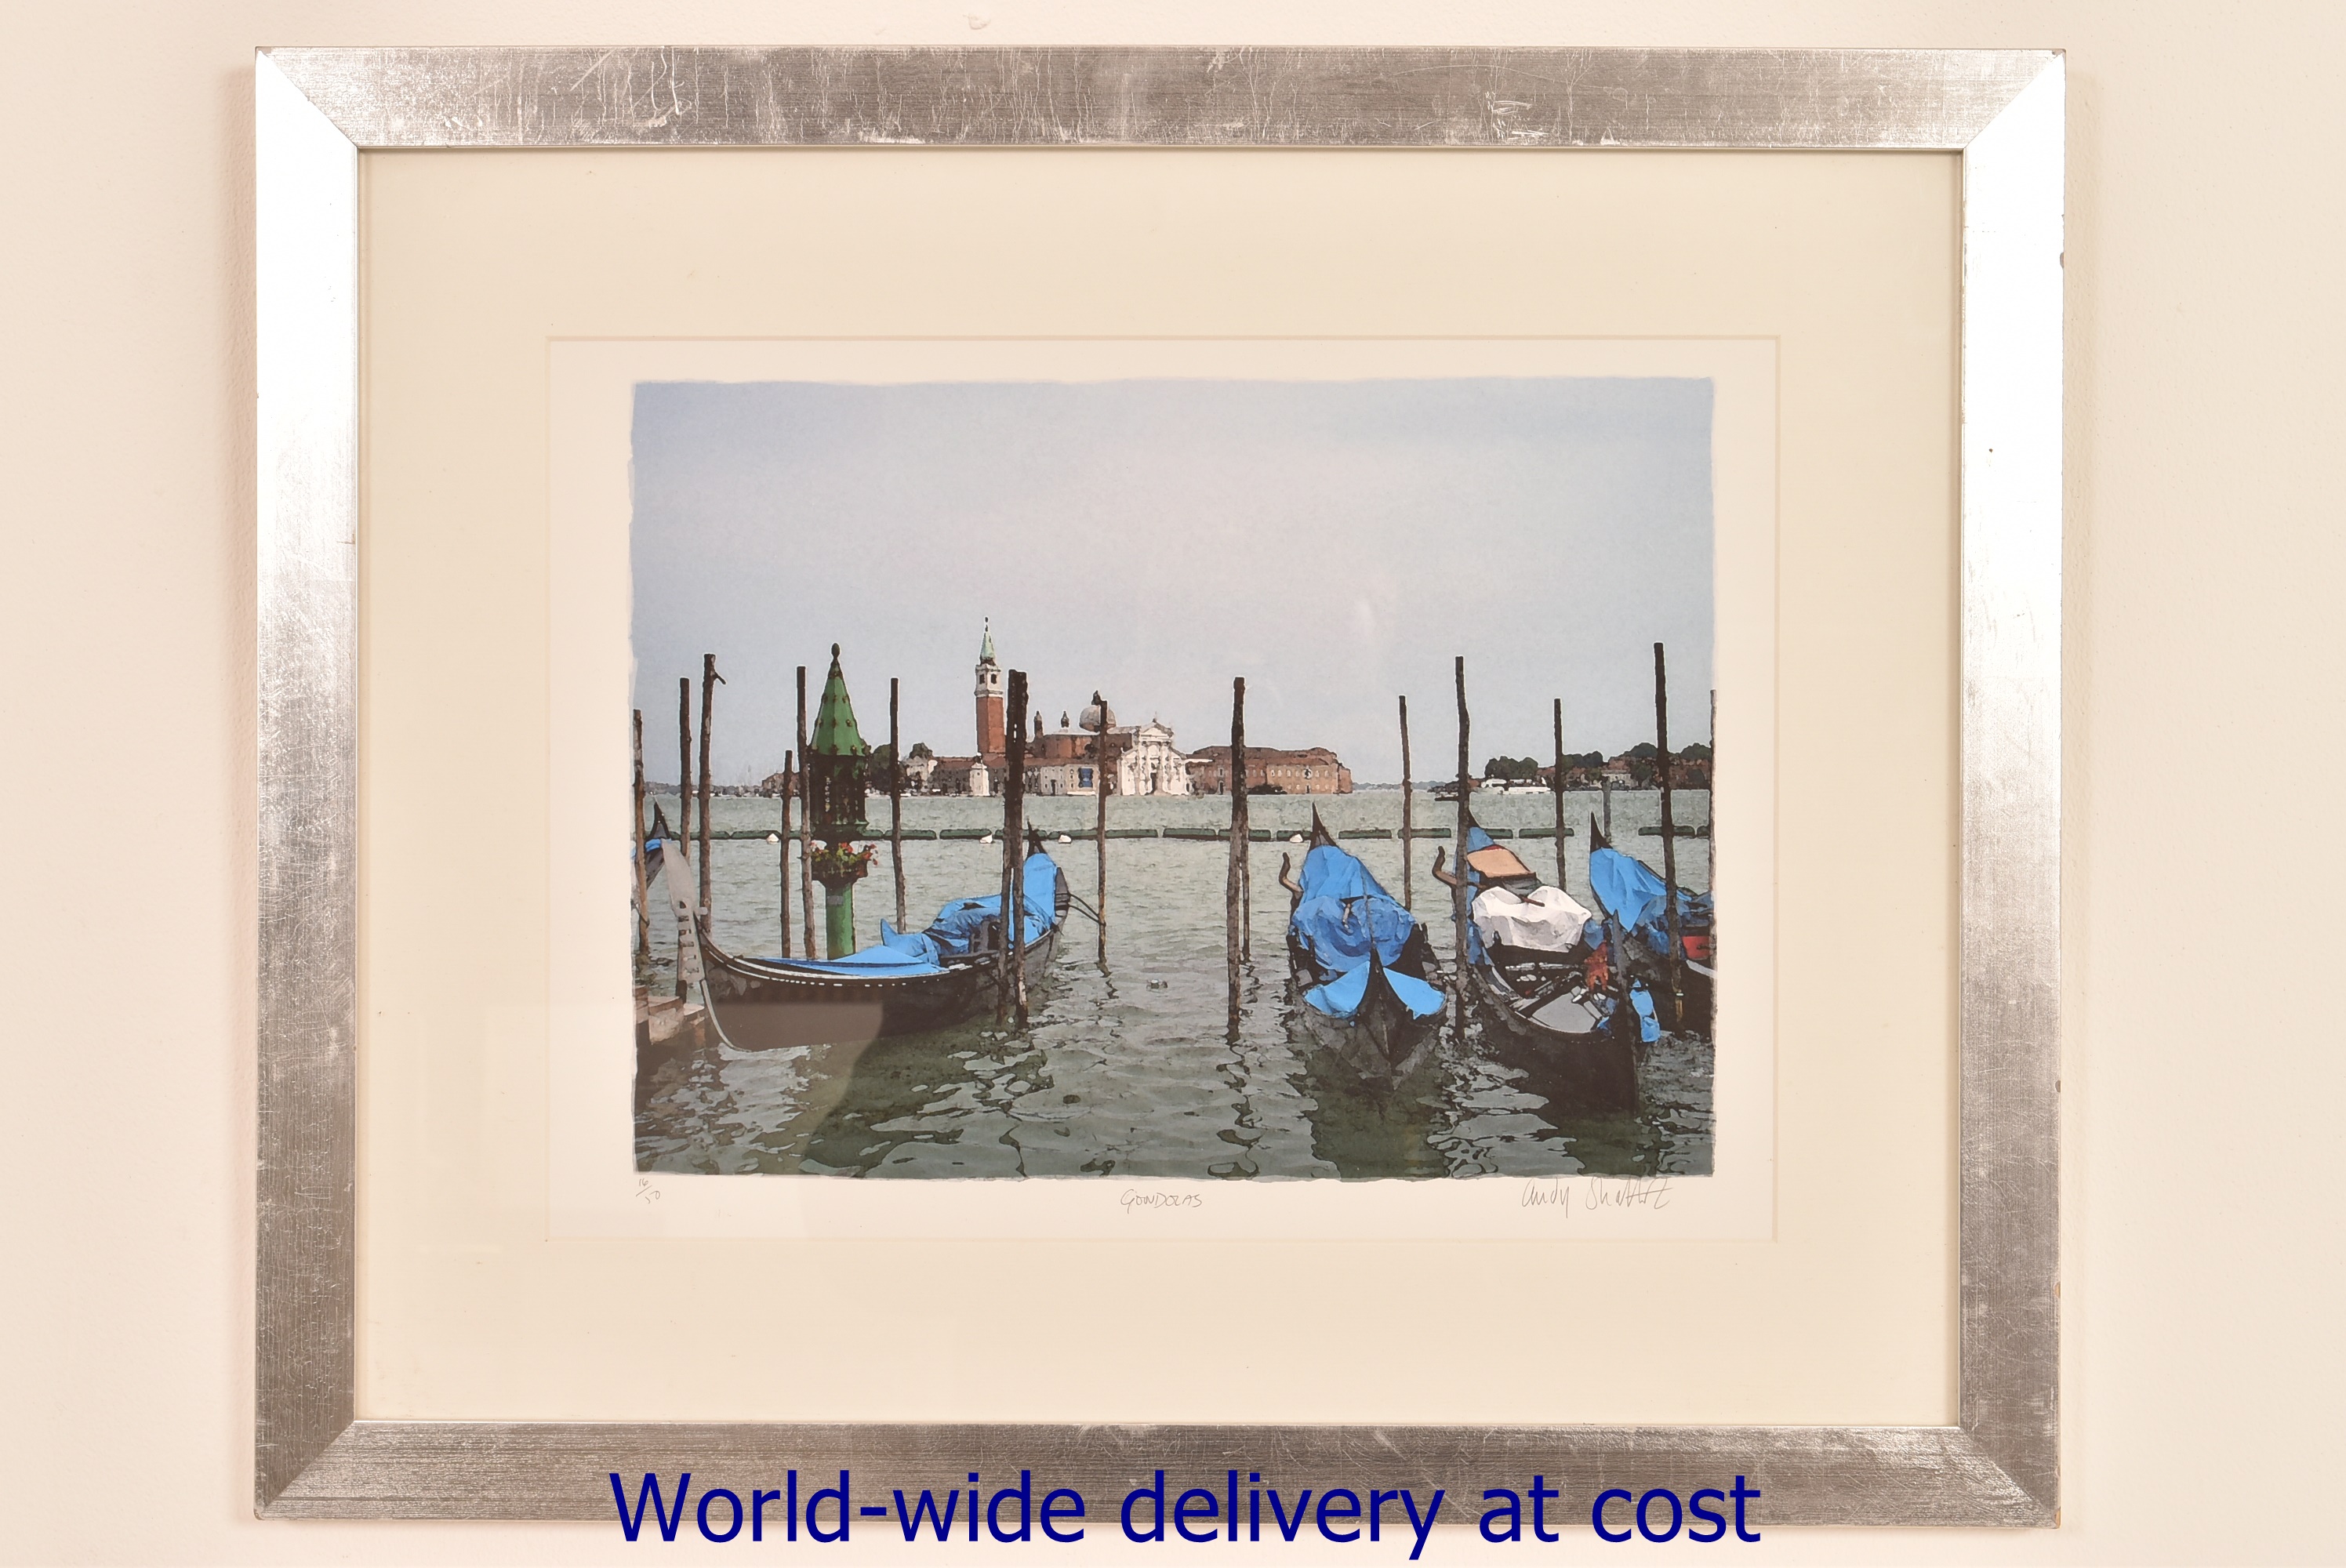 Gondolas, limited edition print 16/50, s